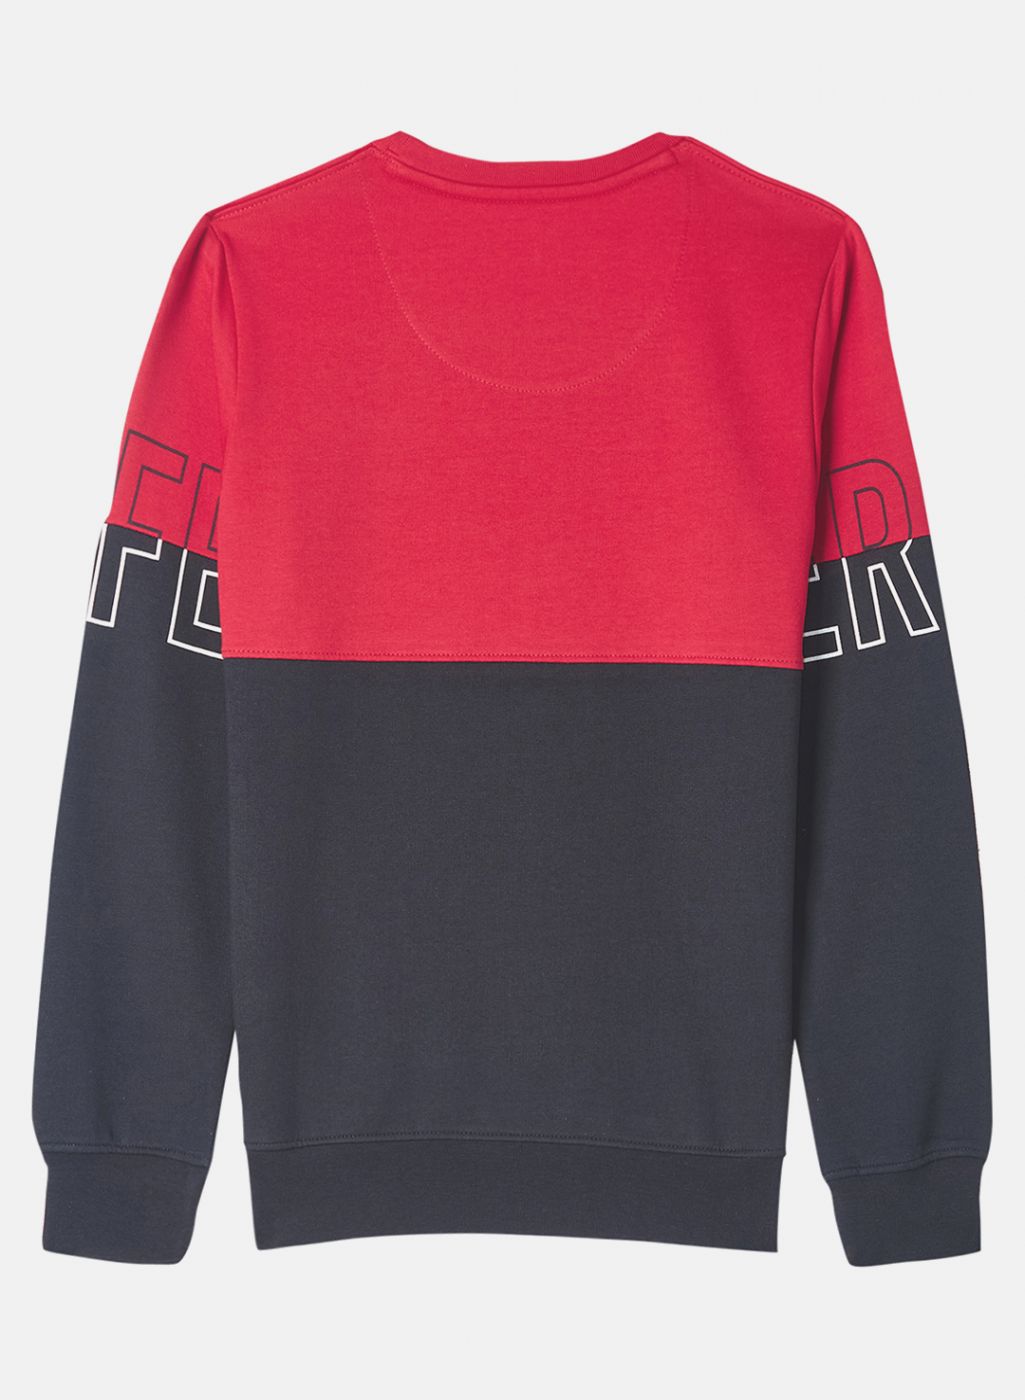 Boys Red Printed Sweatshirt